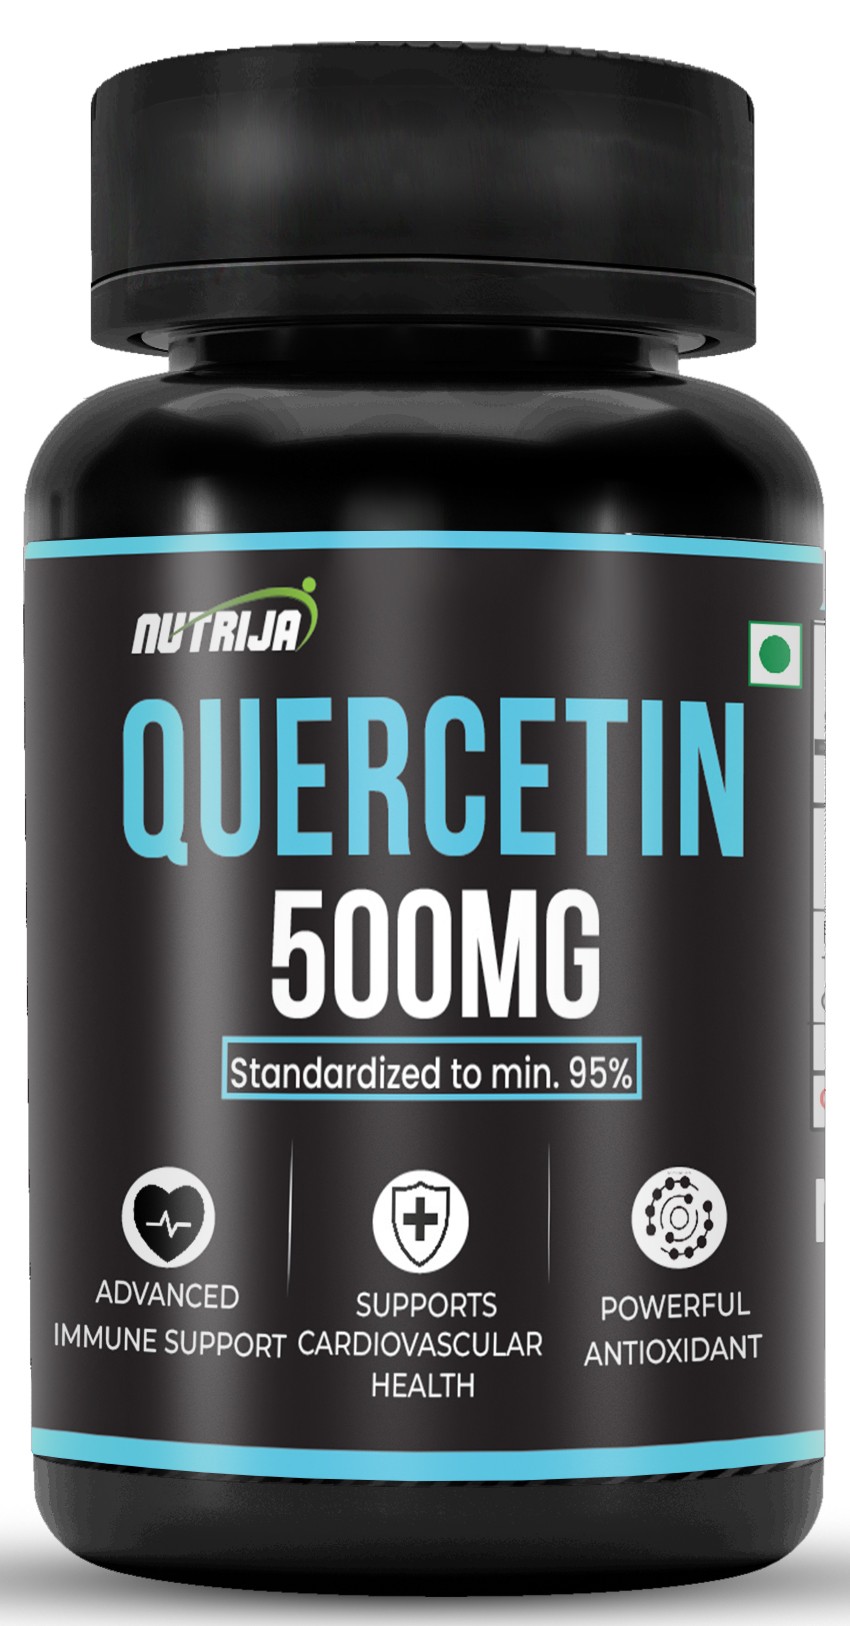 Buy Quercetin 500mg Capsule Supplement | Natural Bioflavonoid ...